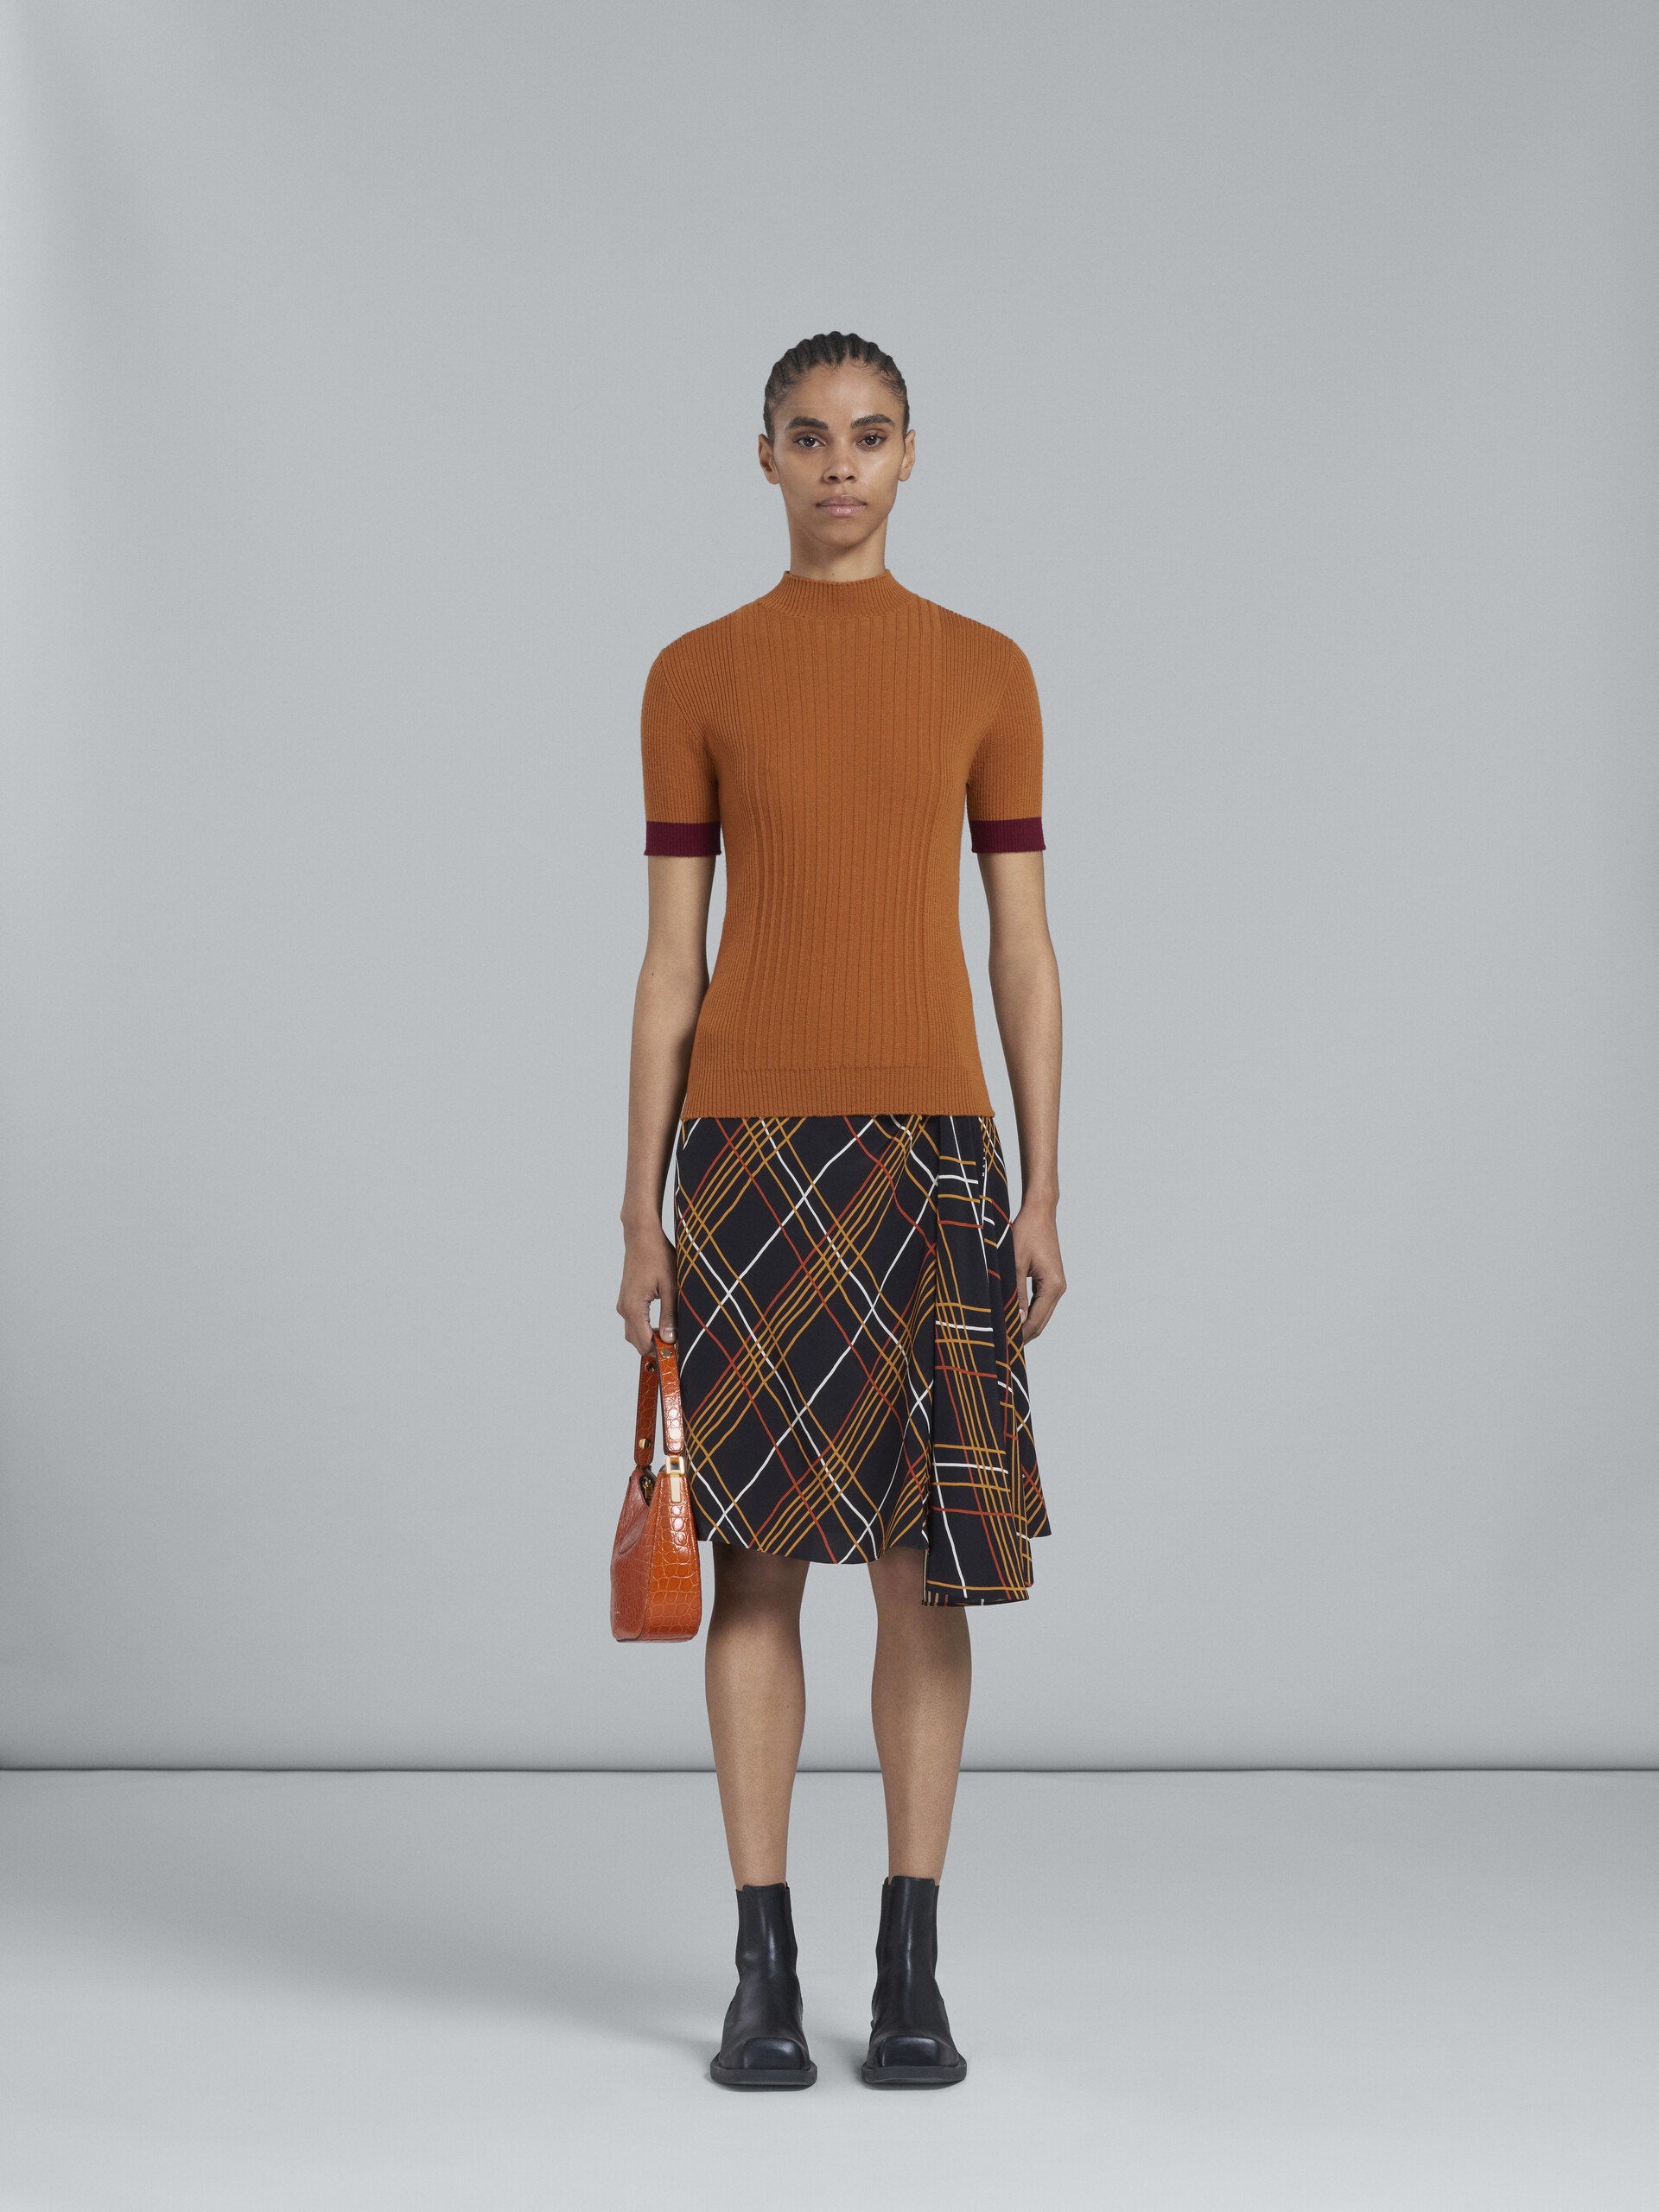 Milano Mini Bag in orange croco print leather - Handbags - Image 2